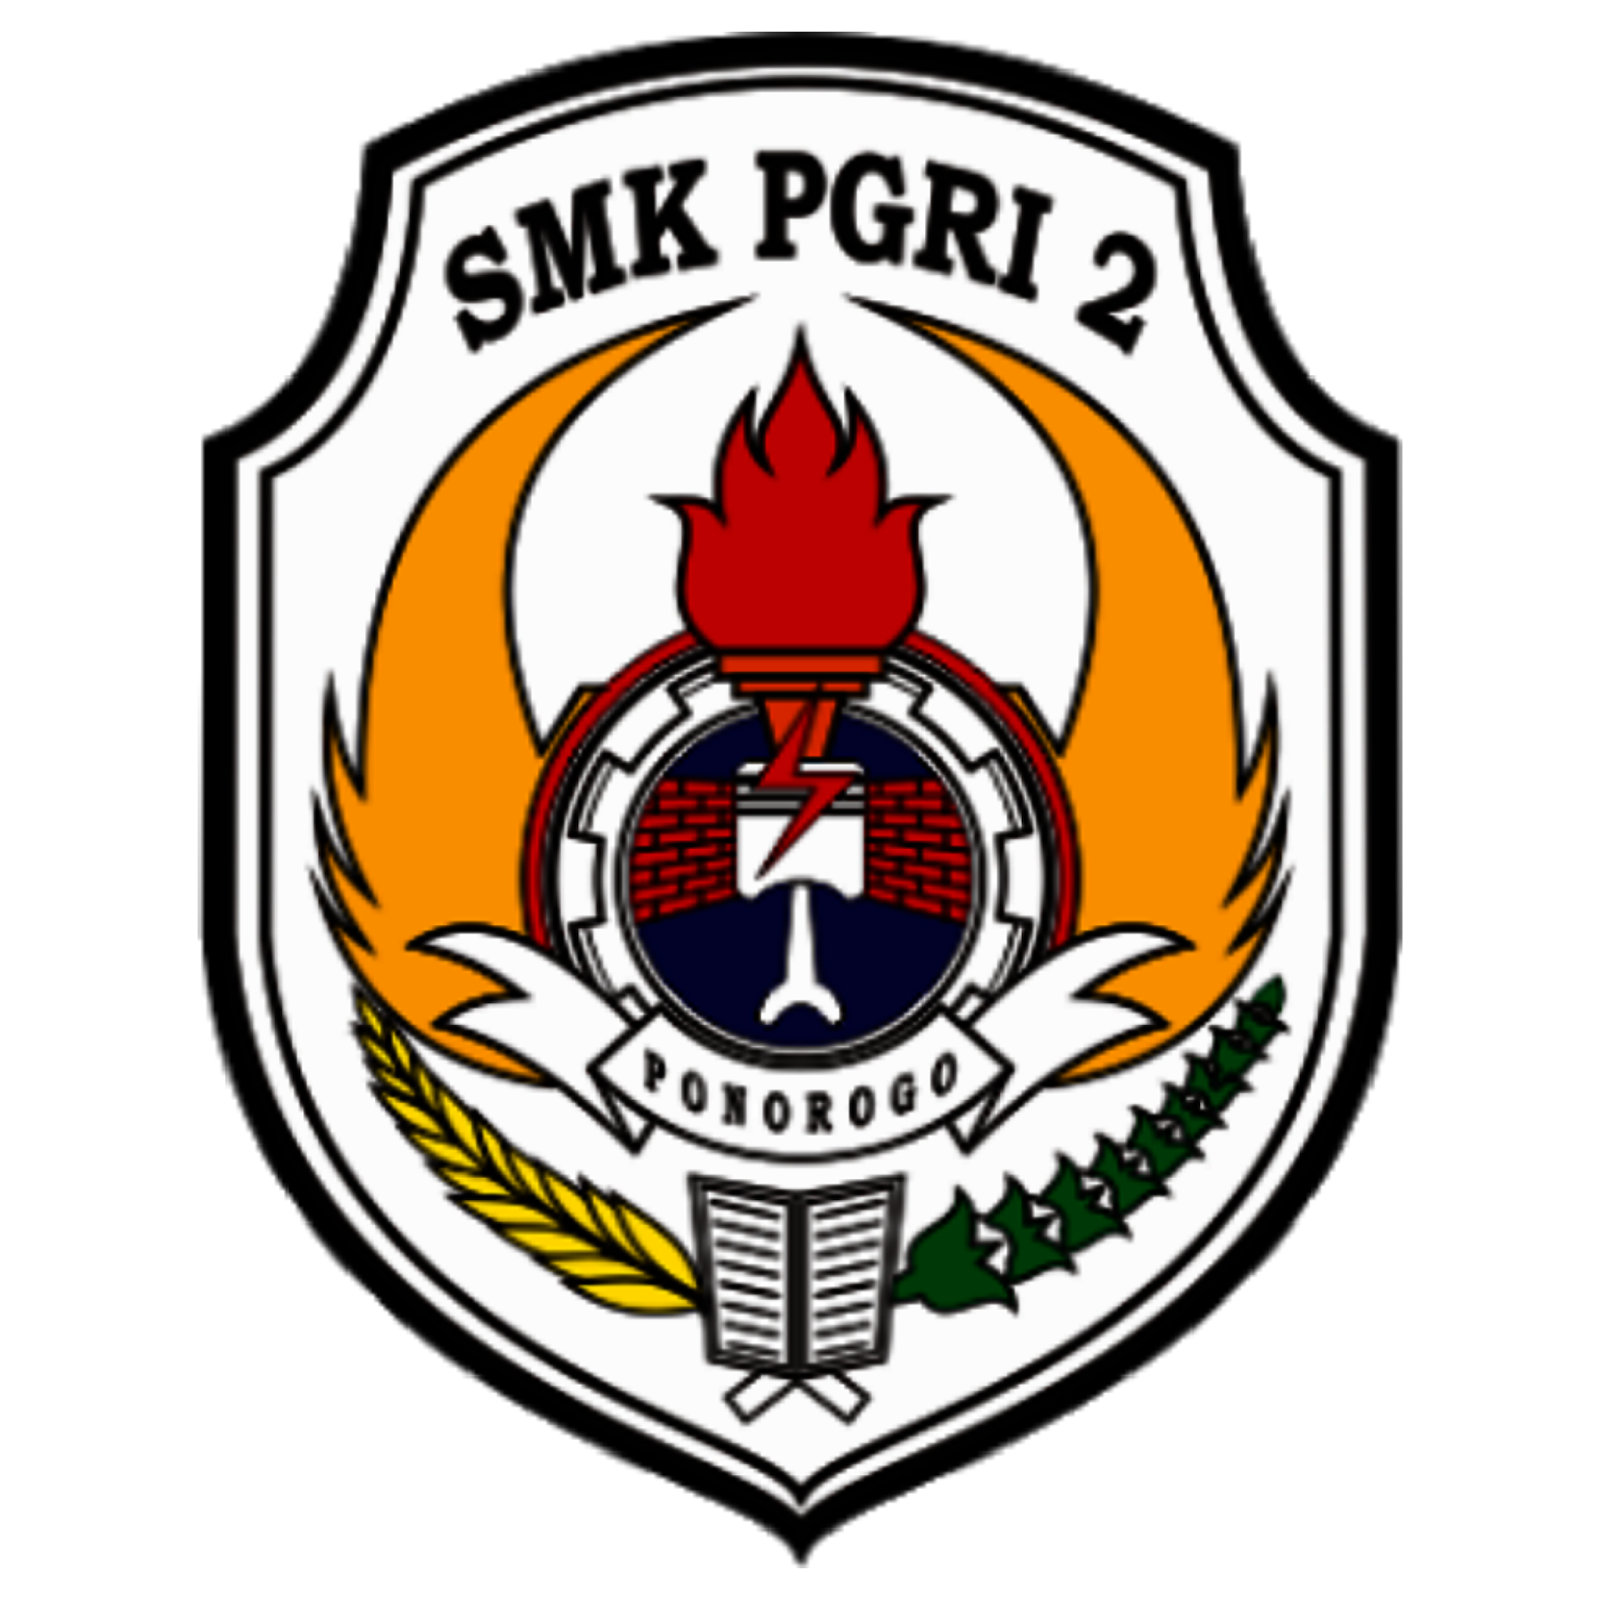 SMK PGRI 2 Ponorogo